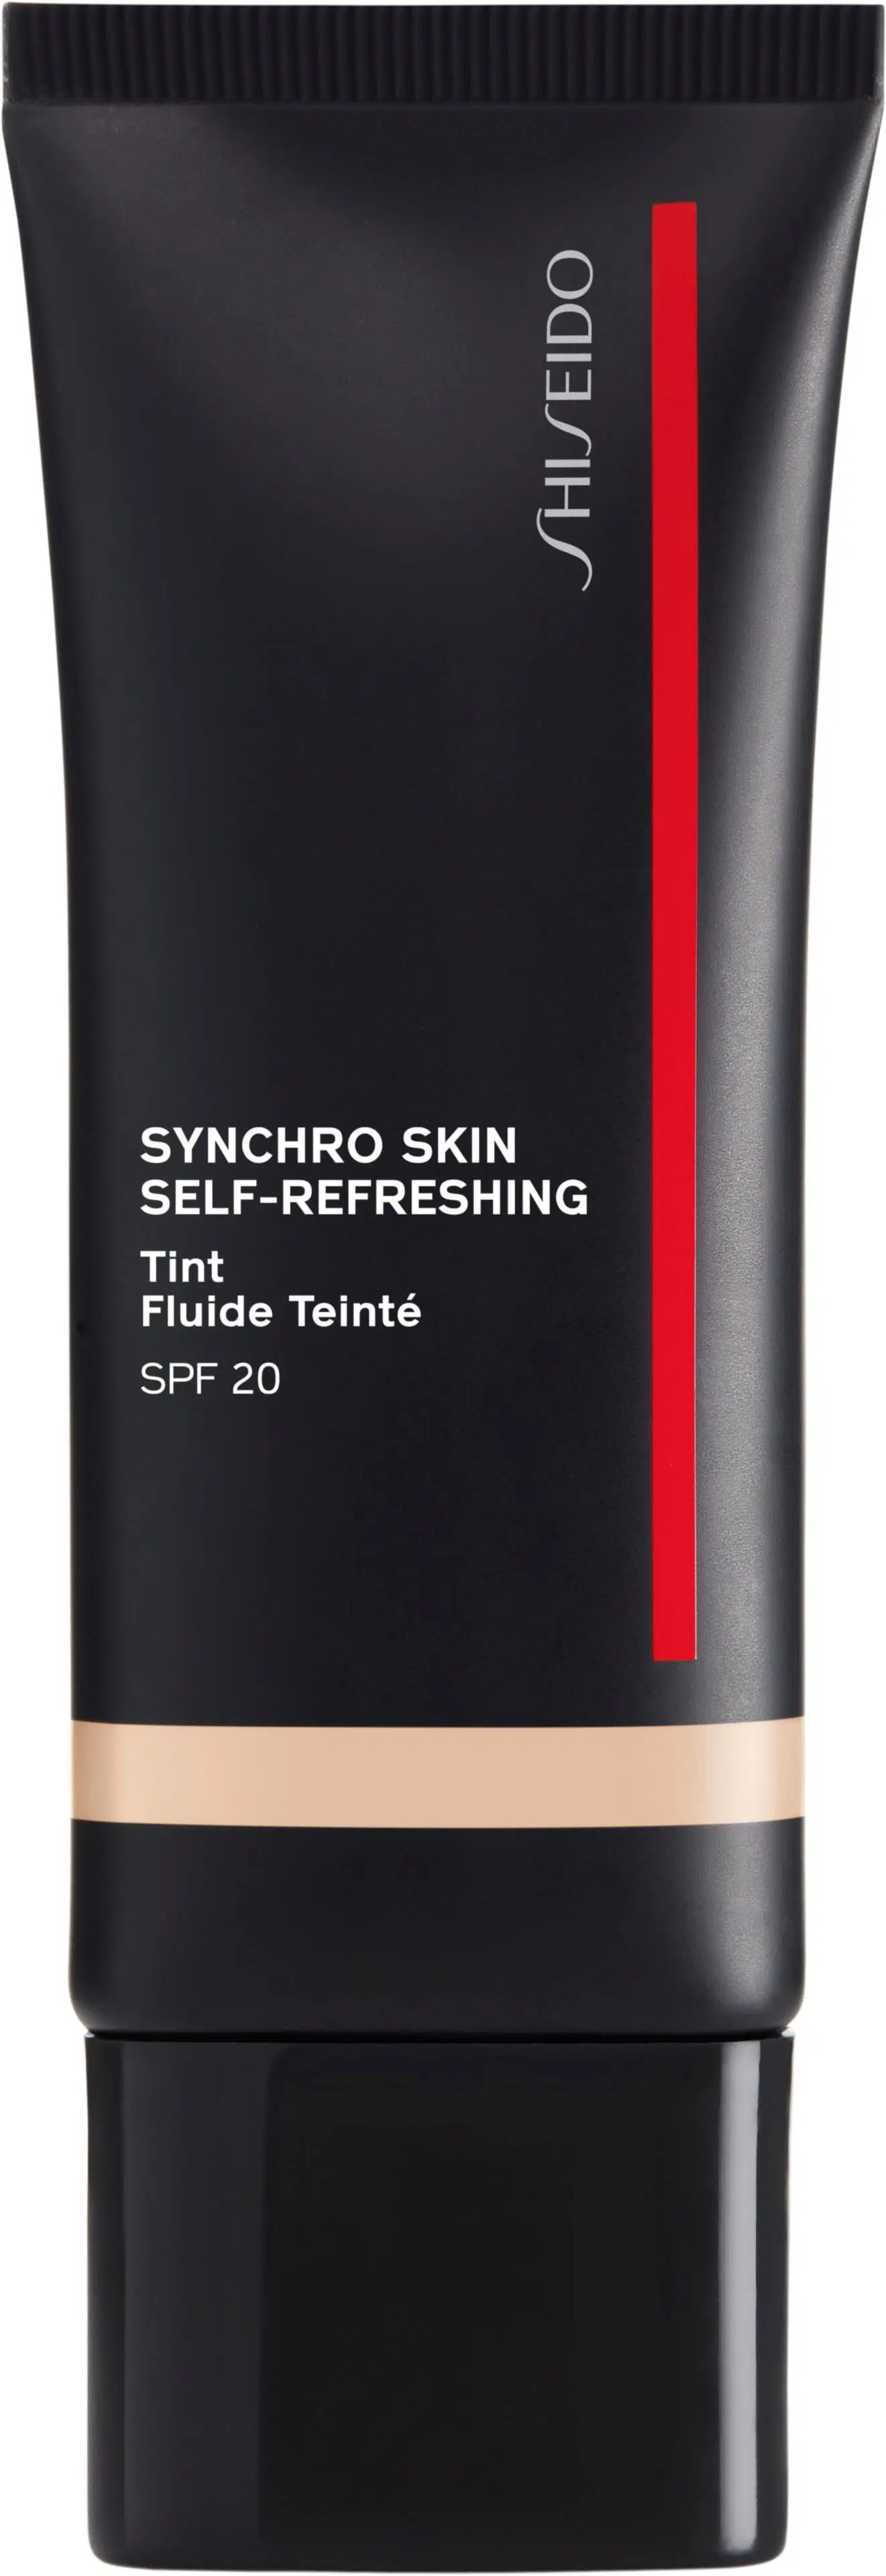 Shiseido Synchro Skin Self-Refreshing Tint meikkivoide 30 ml